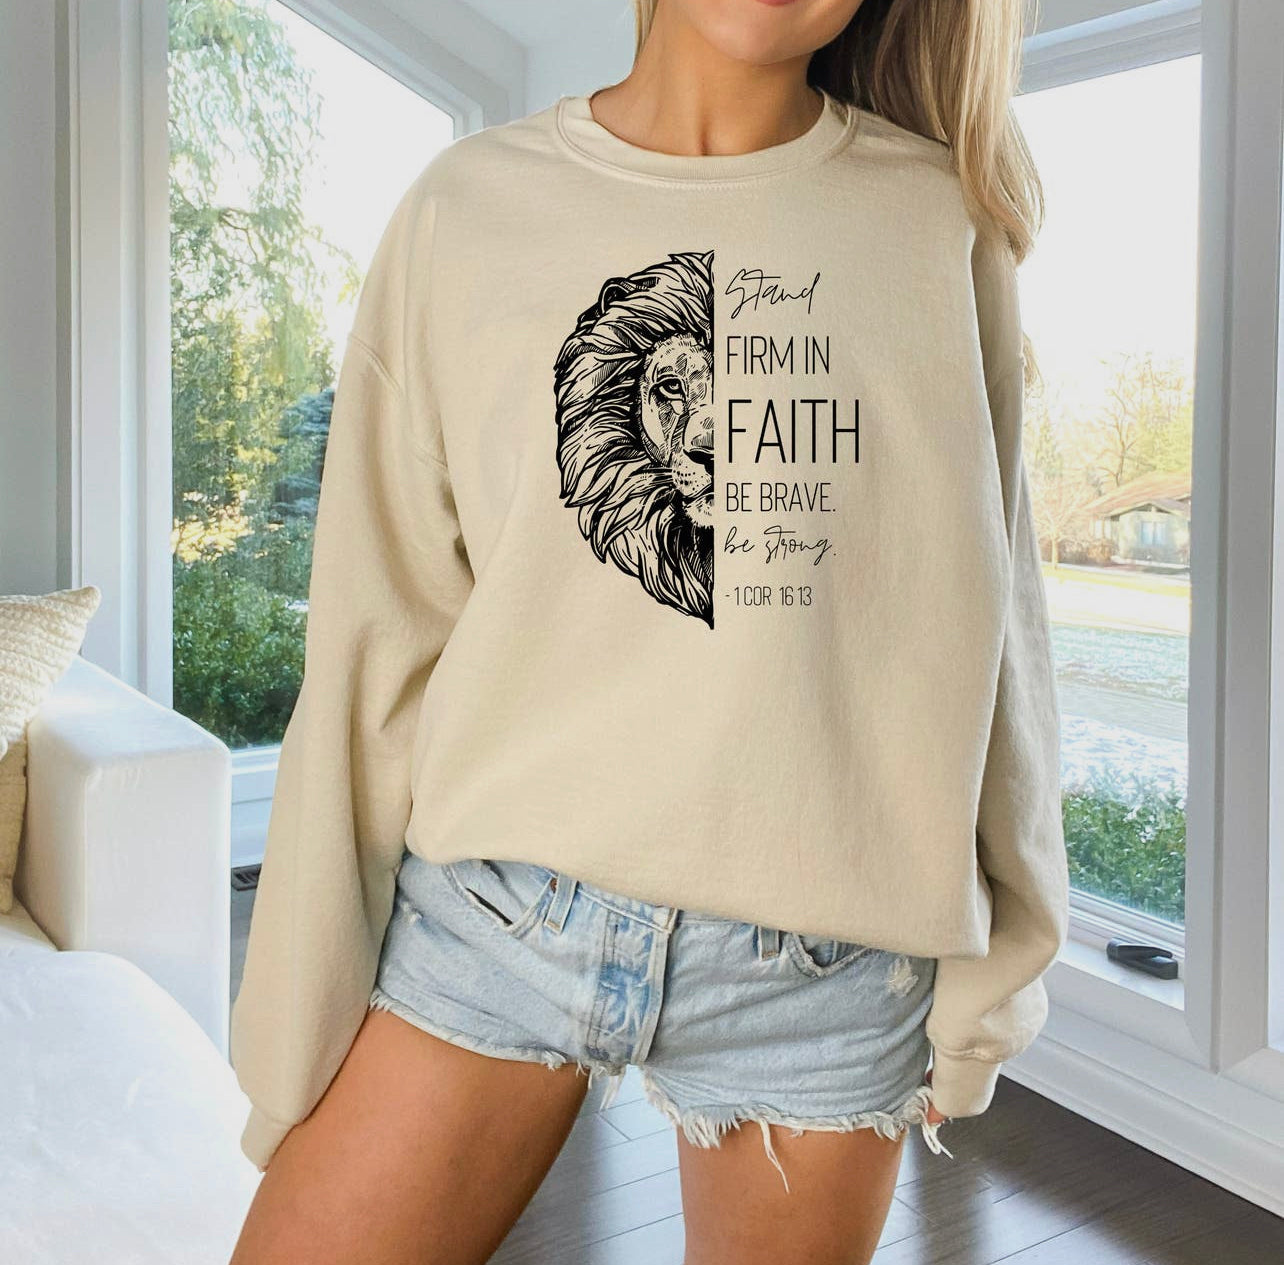 Stay Firm on Faith Sweatshirt